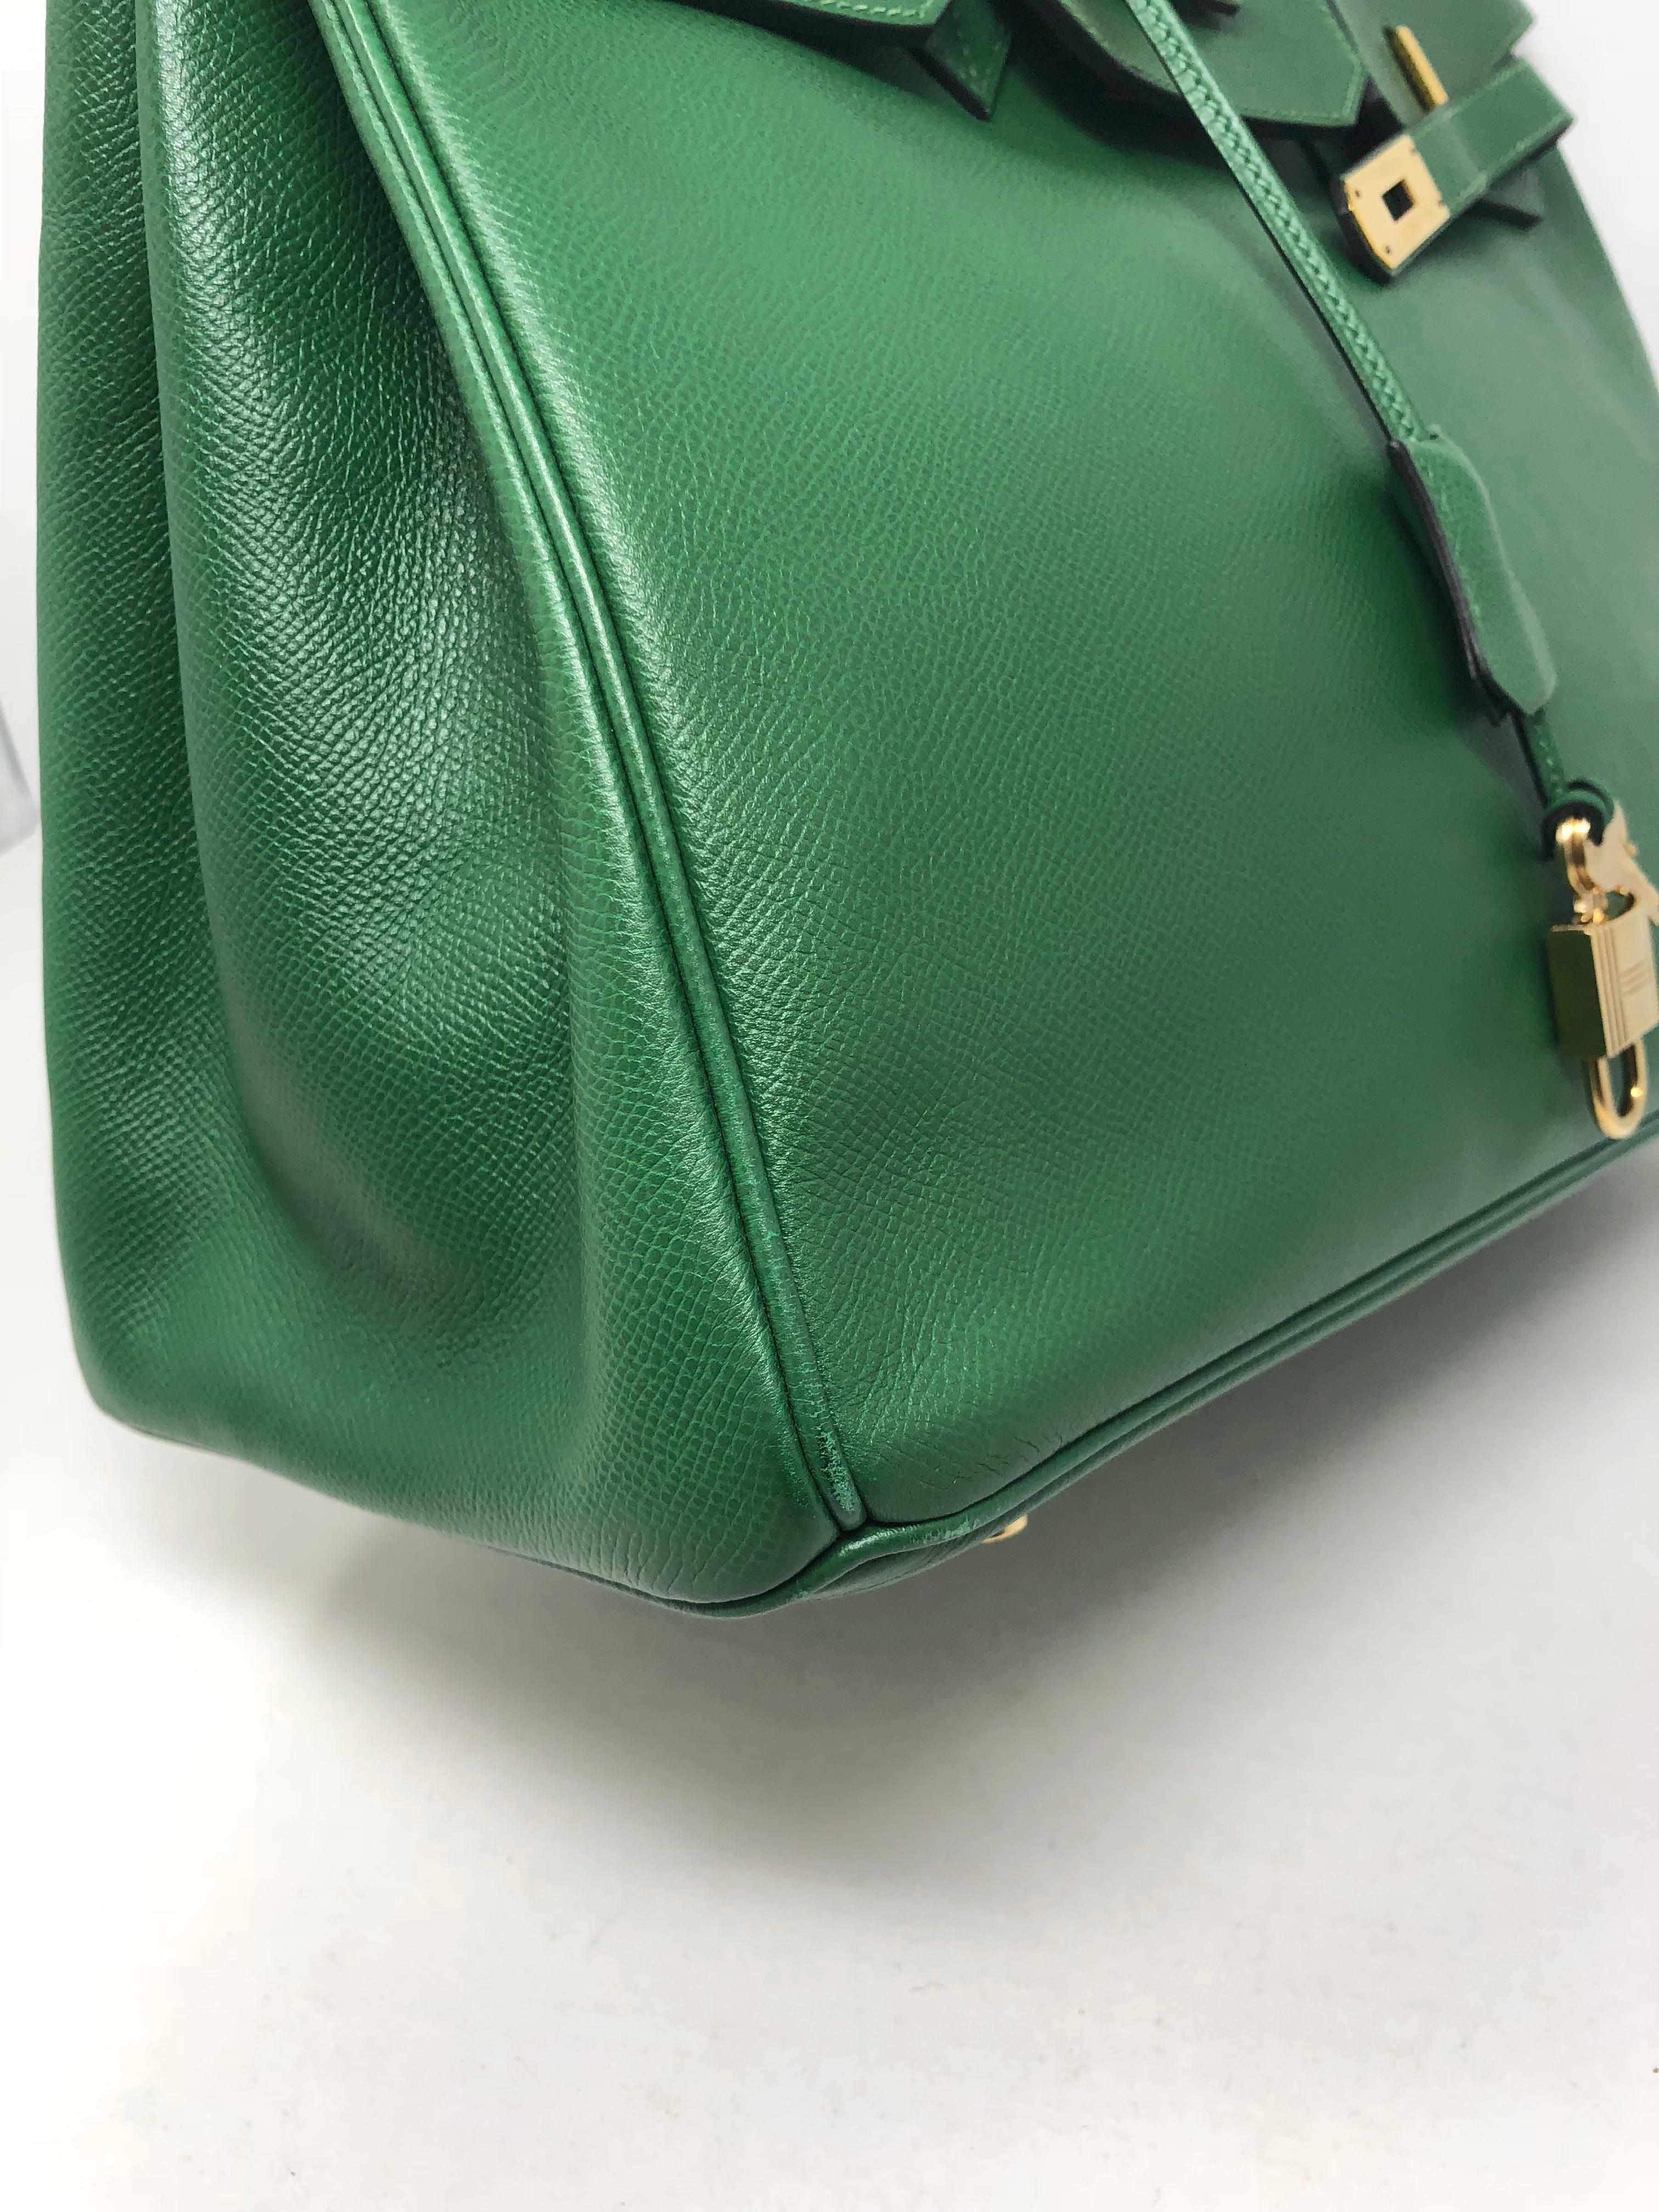 Hermes Emerald Green courchevel leather Gold hardware Birkin 35 Bag 4